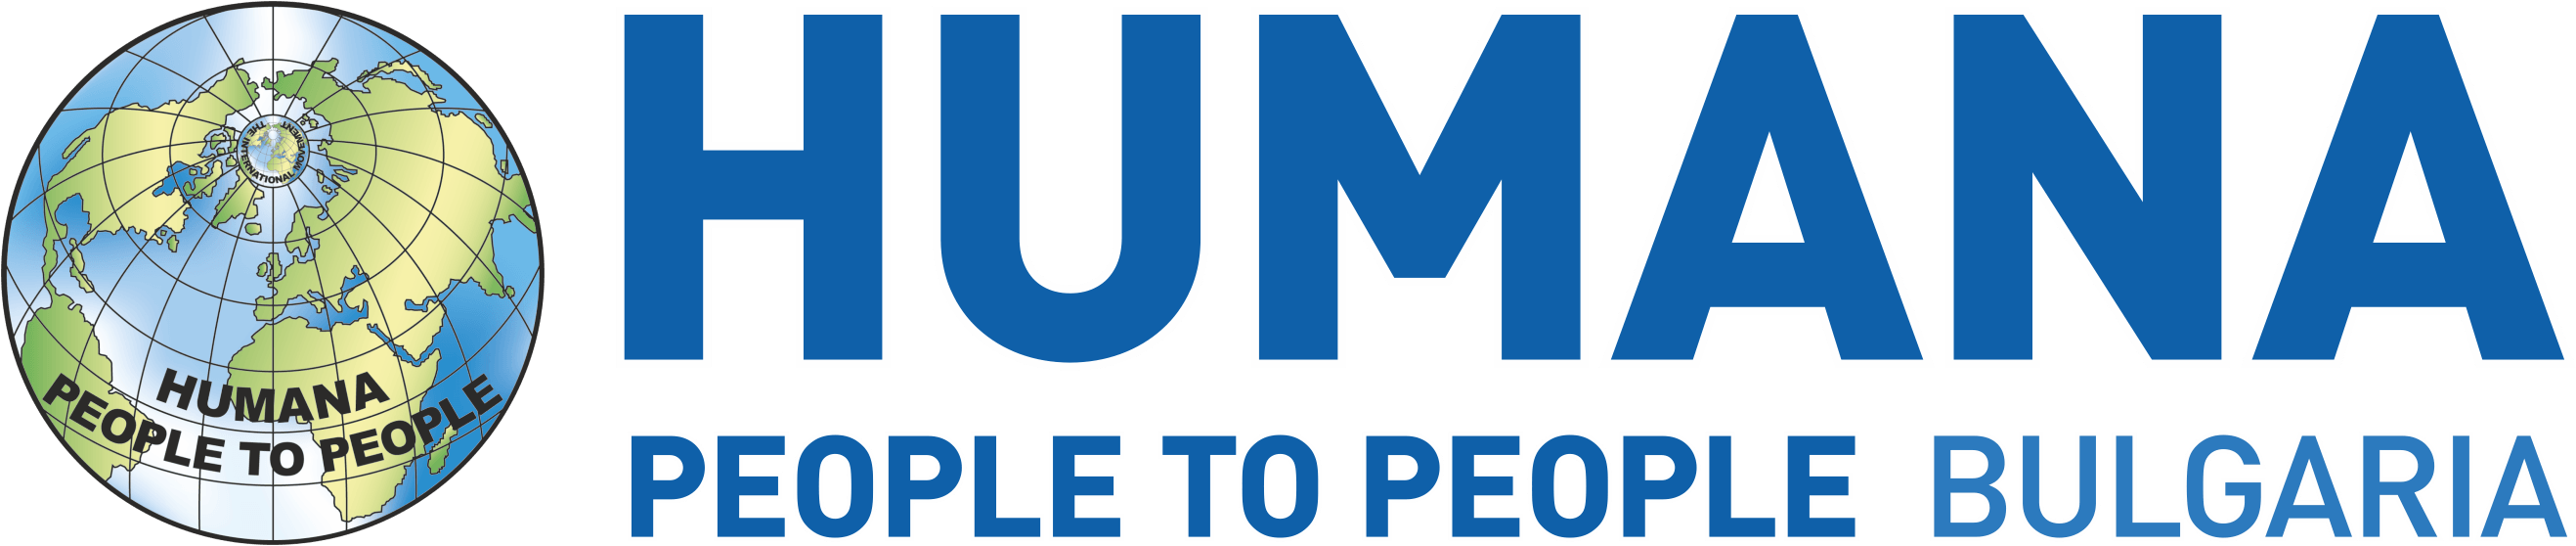 Humana Logo - Humana People to People